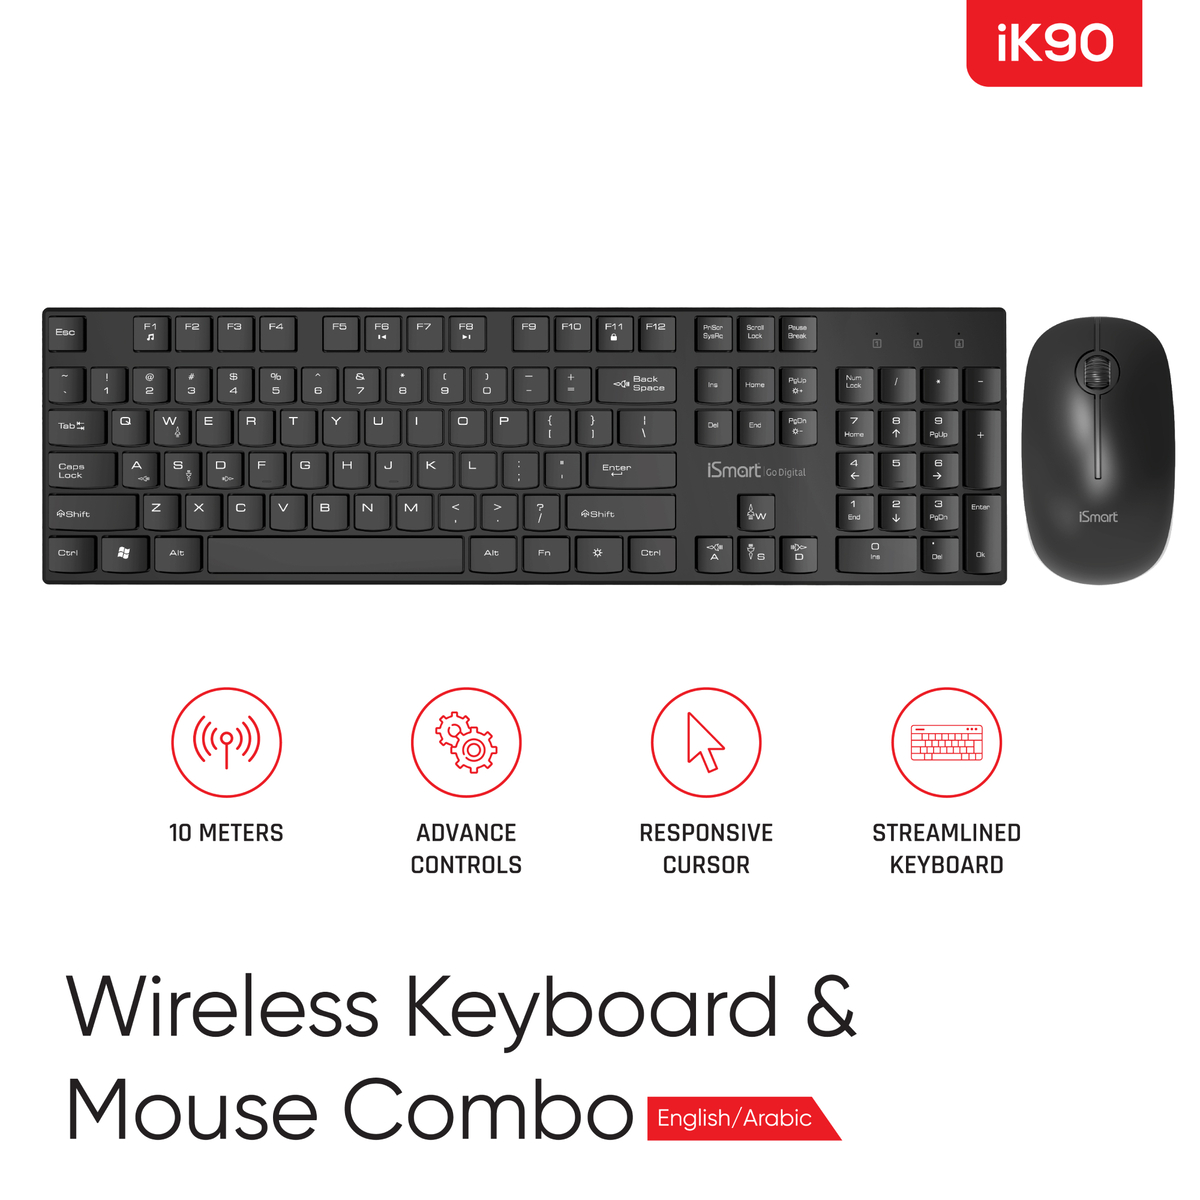 ISmart Wireless Keyboard and Mouse Combo, Black, IK90